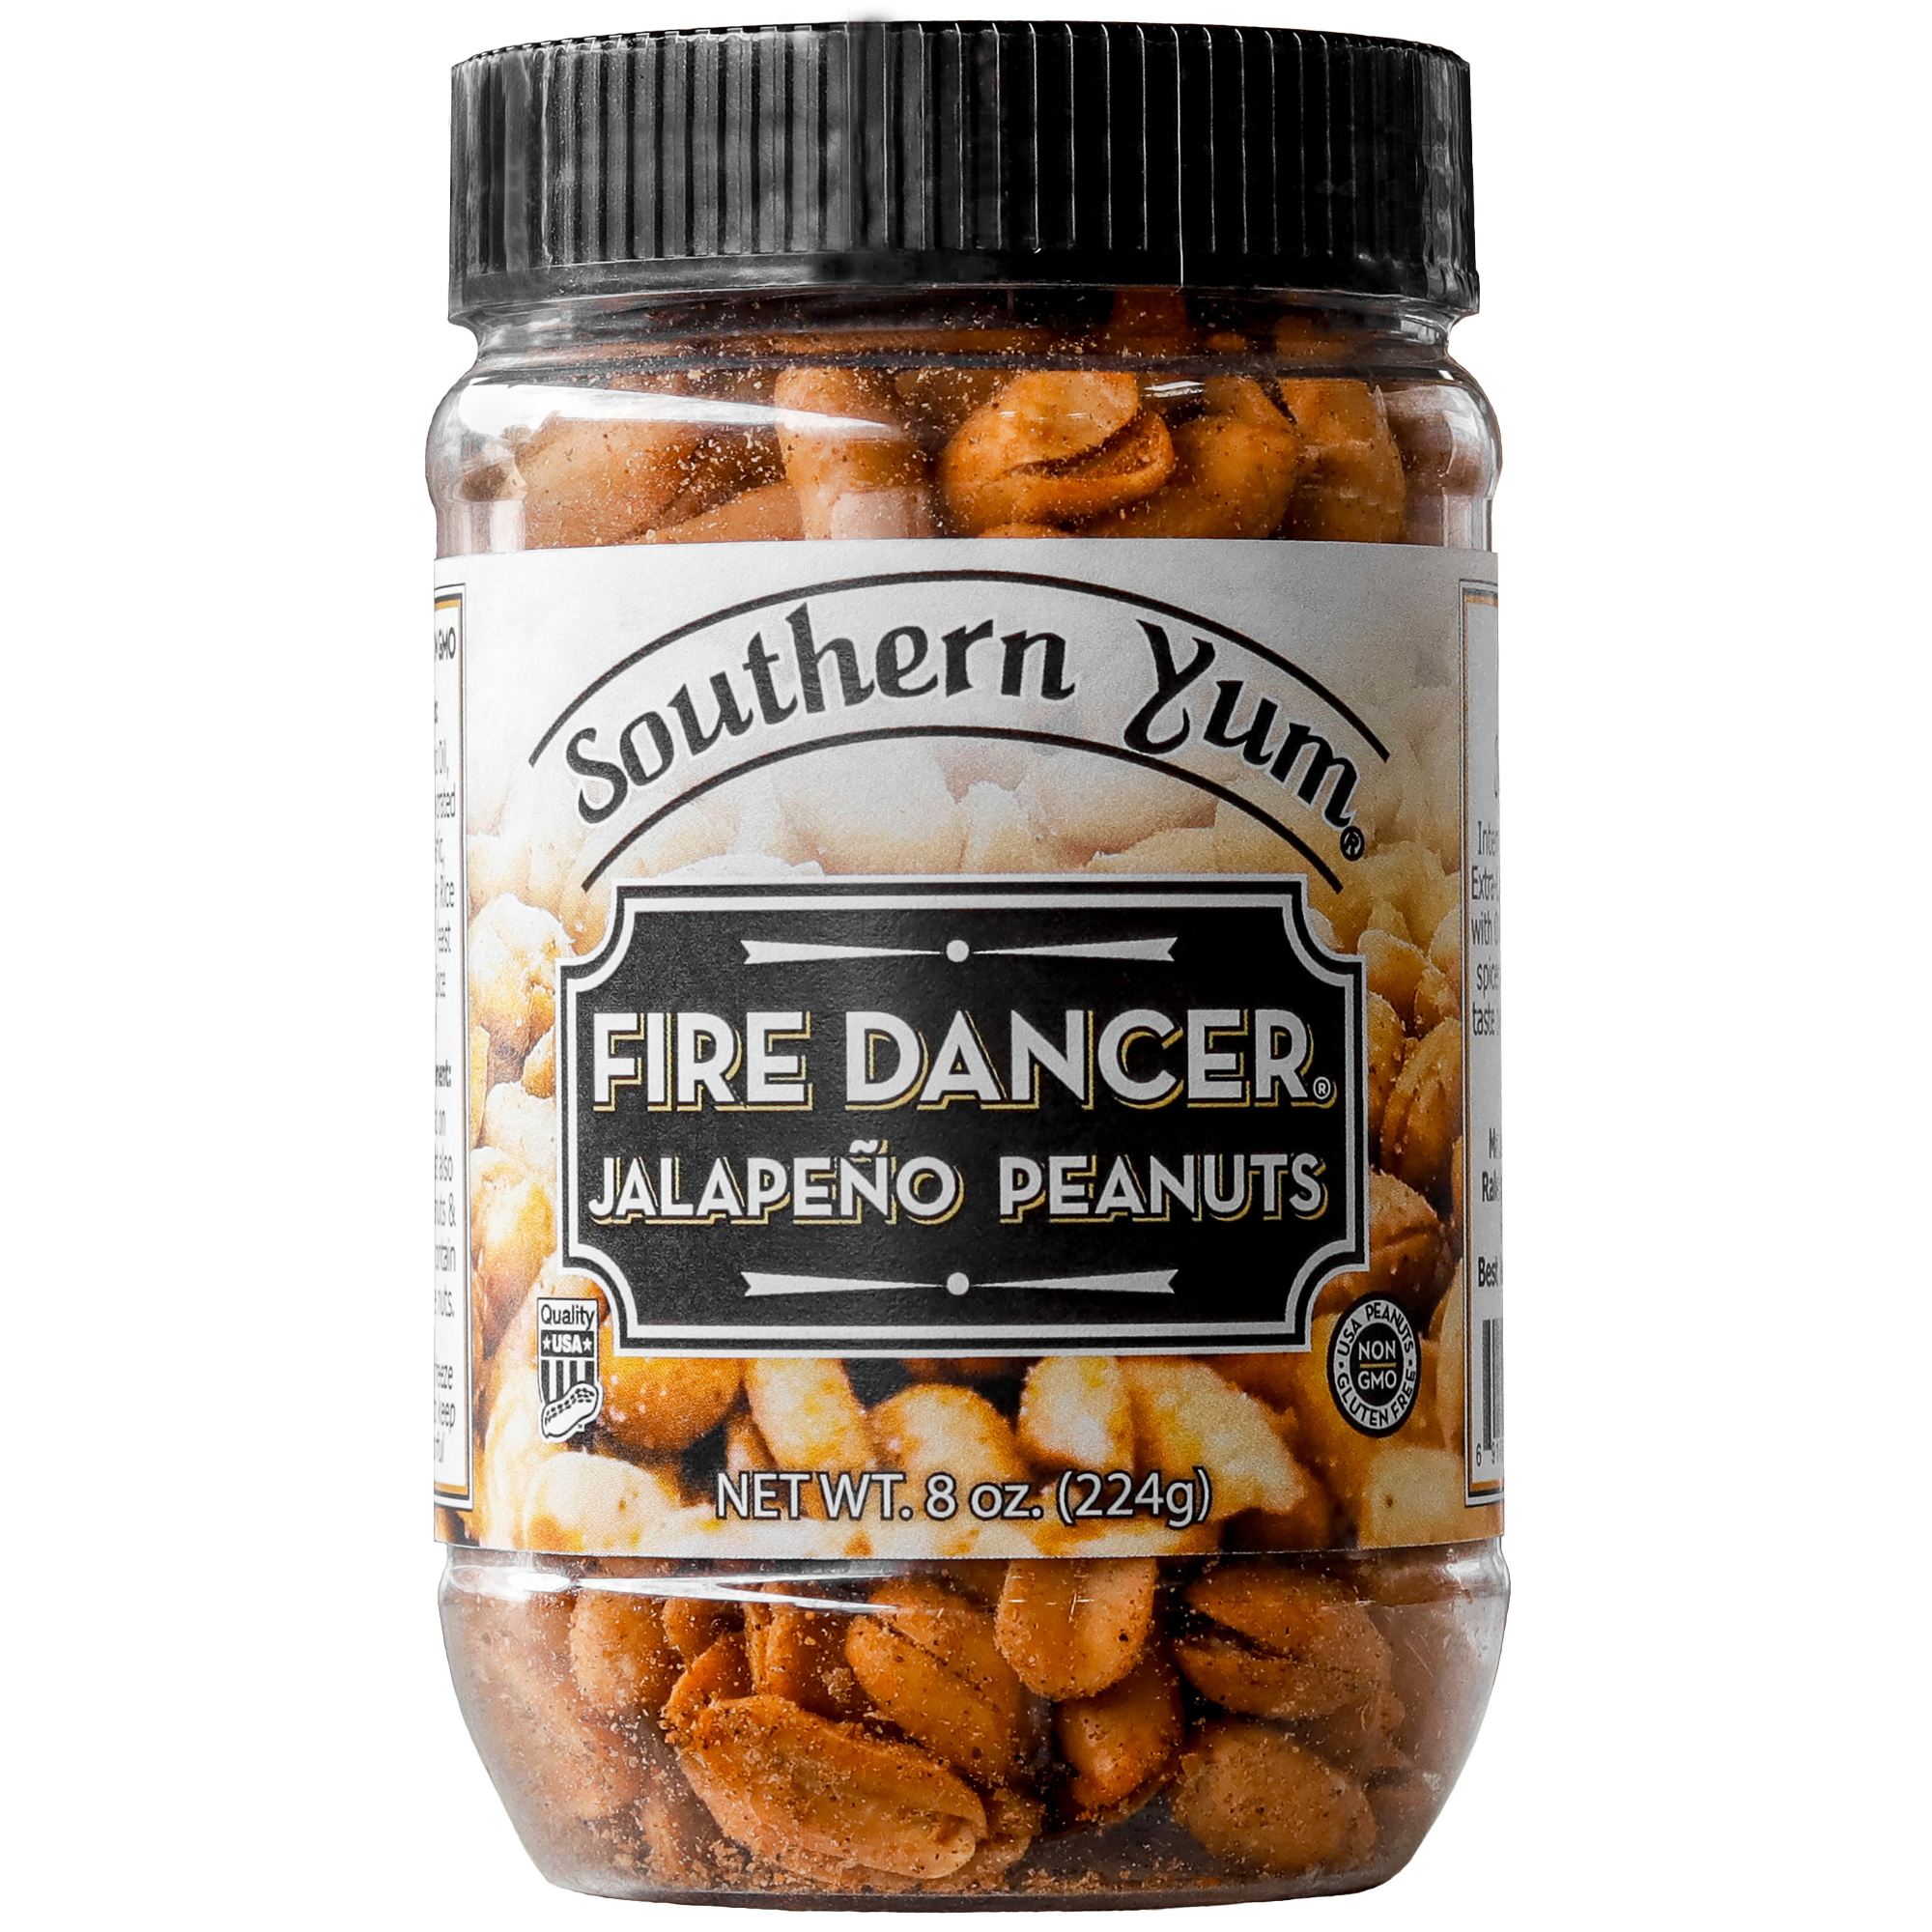 Southern Yum Fire Dancer Jalapeño Peanuts, 8oz